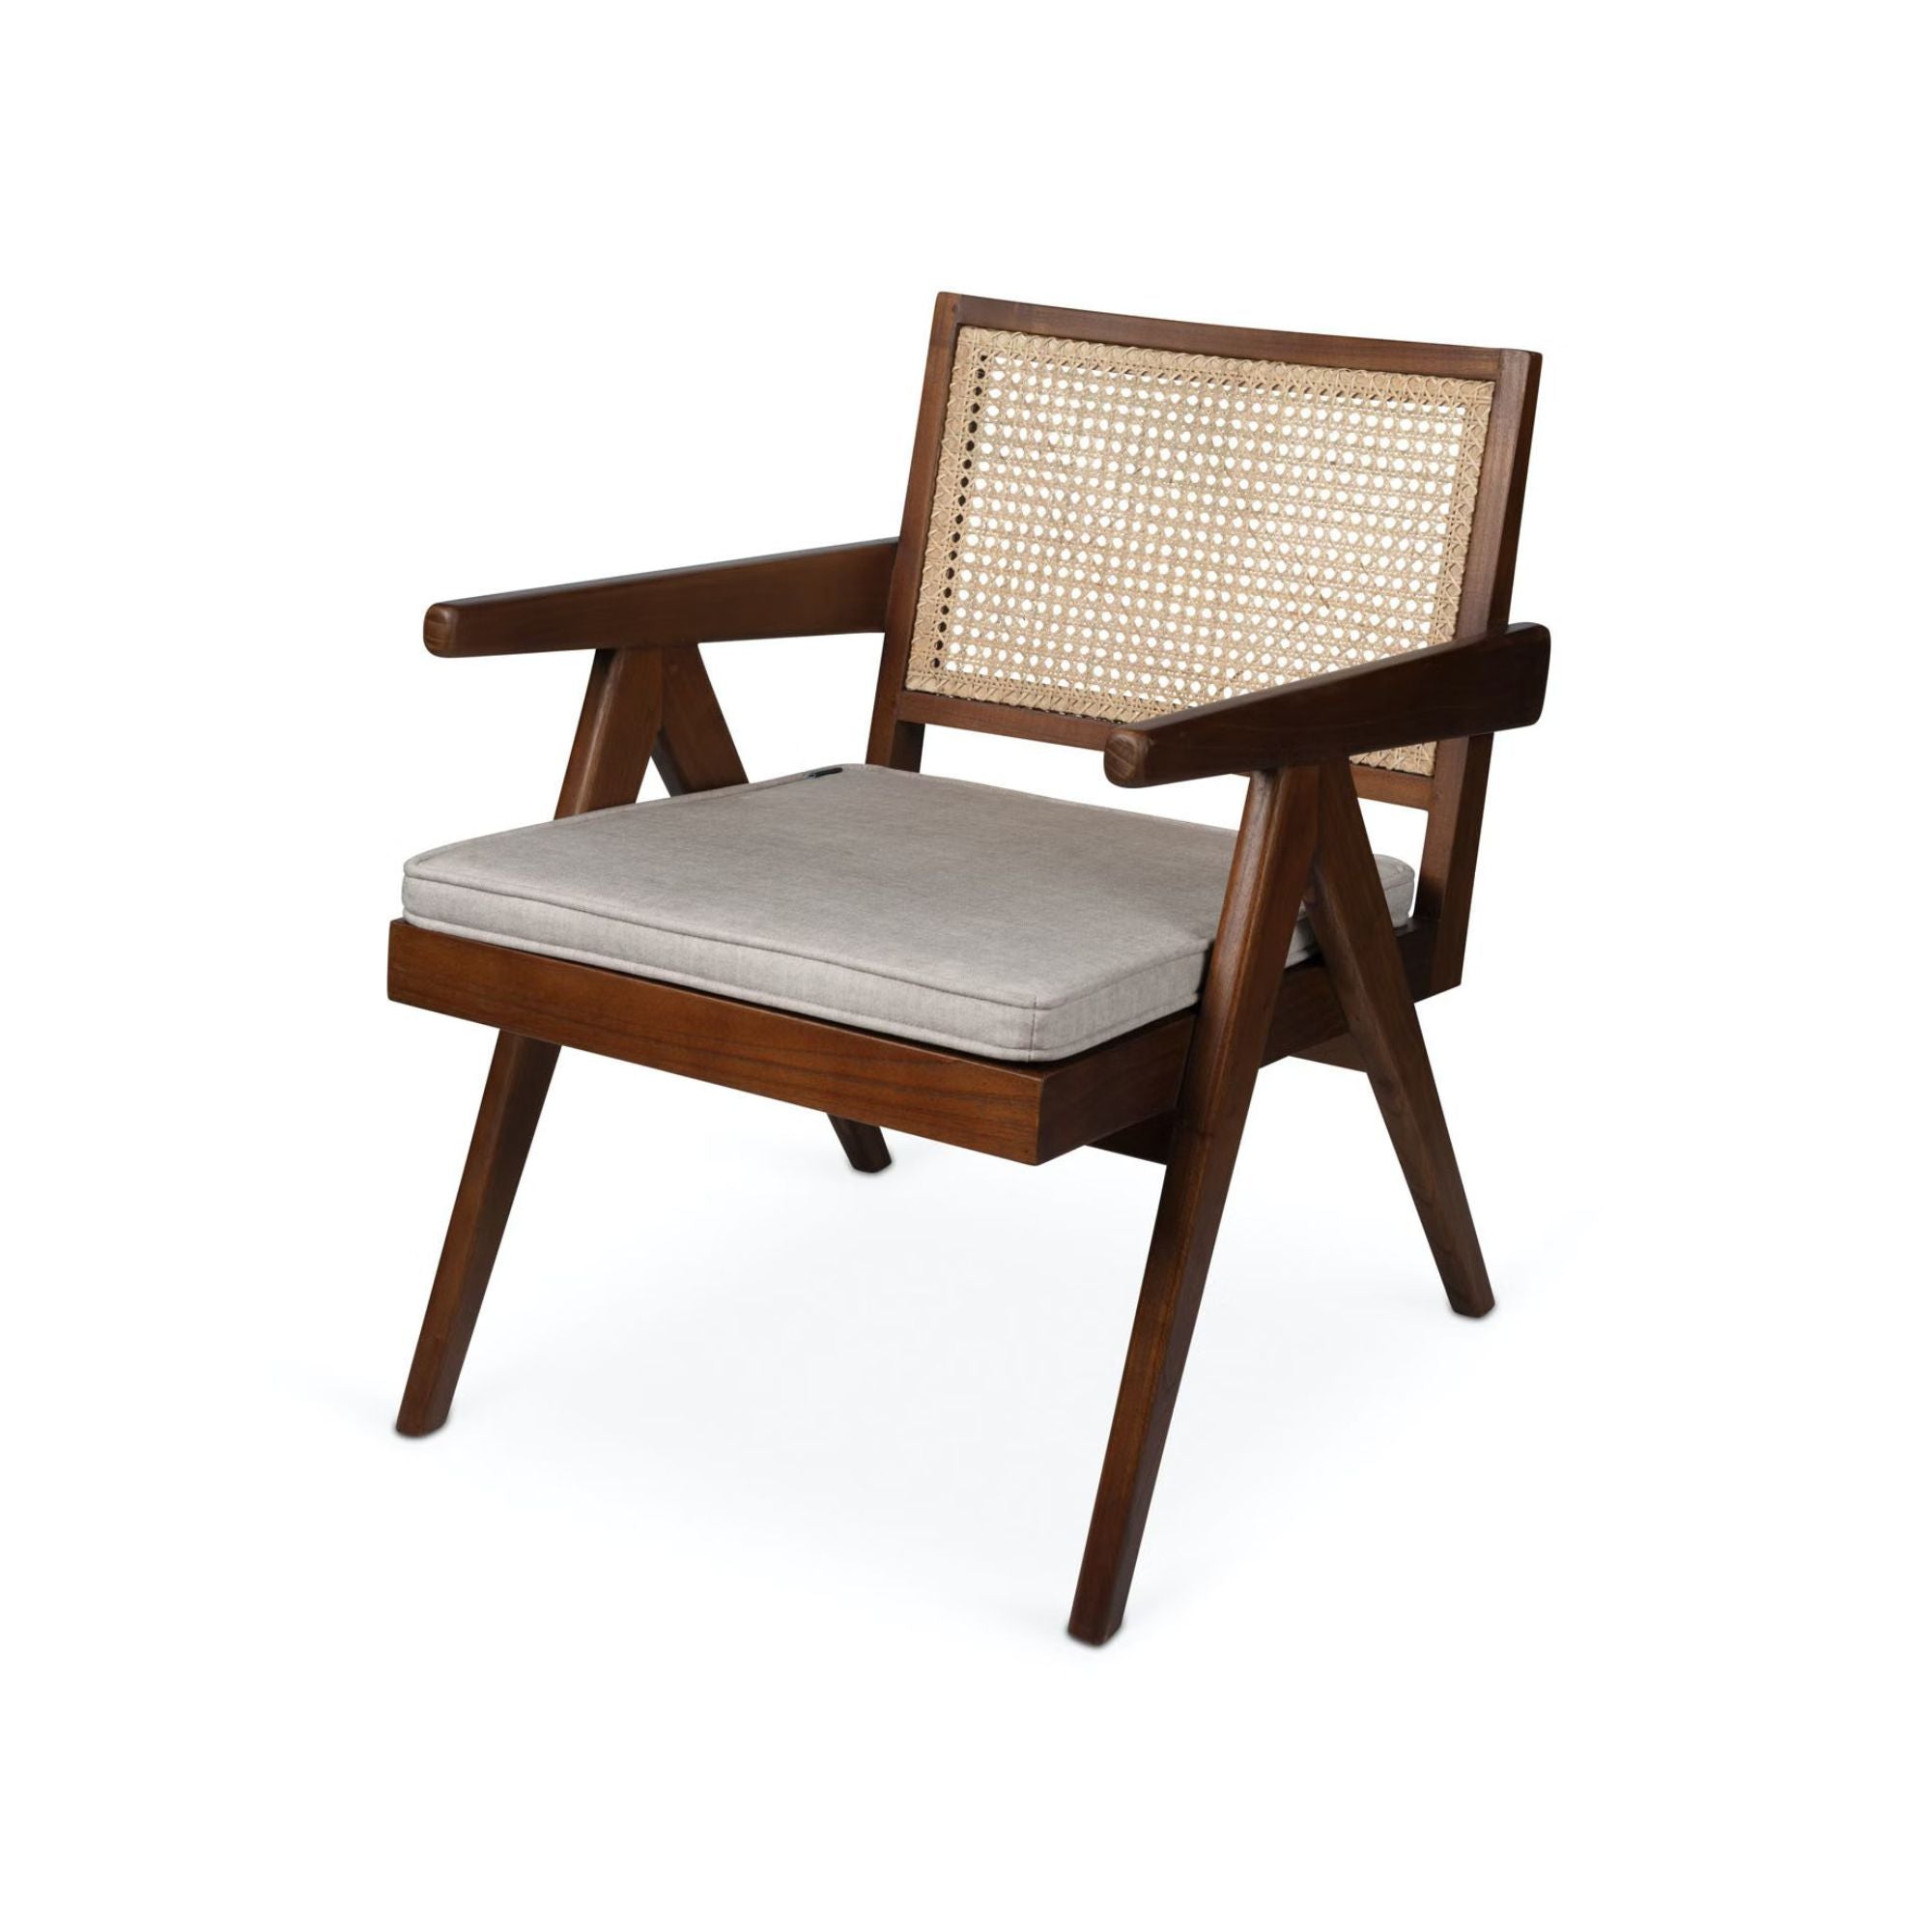 Cushion for Lounge Chair Seat Cushion Detjer